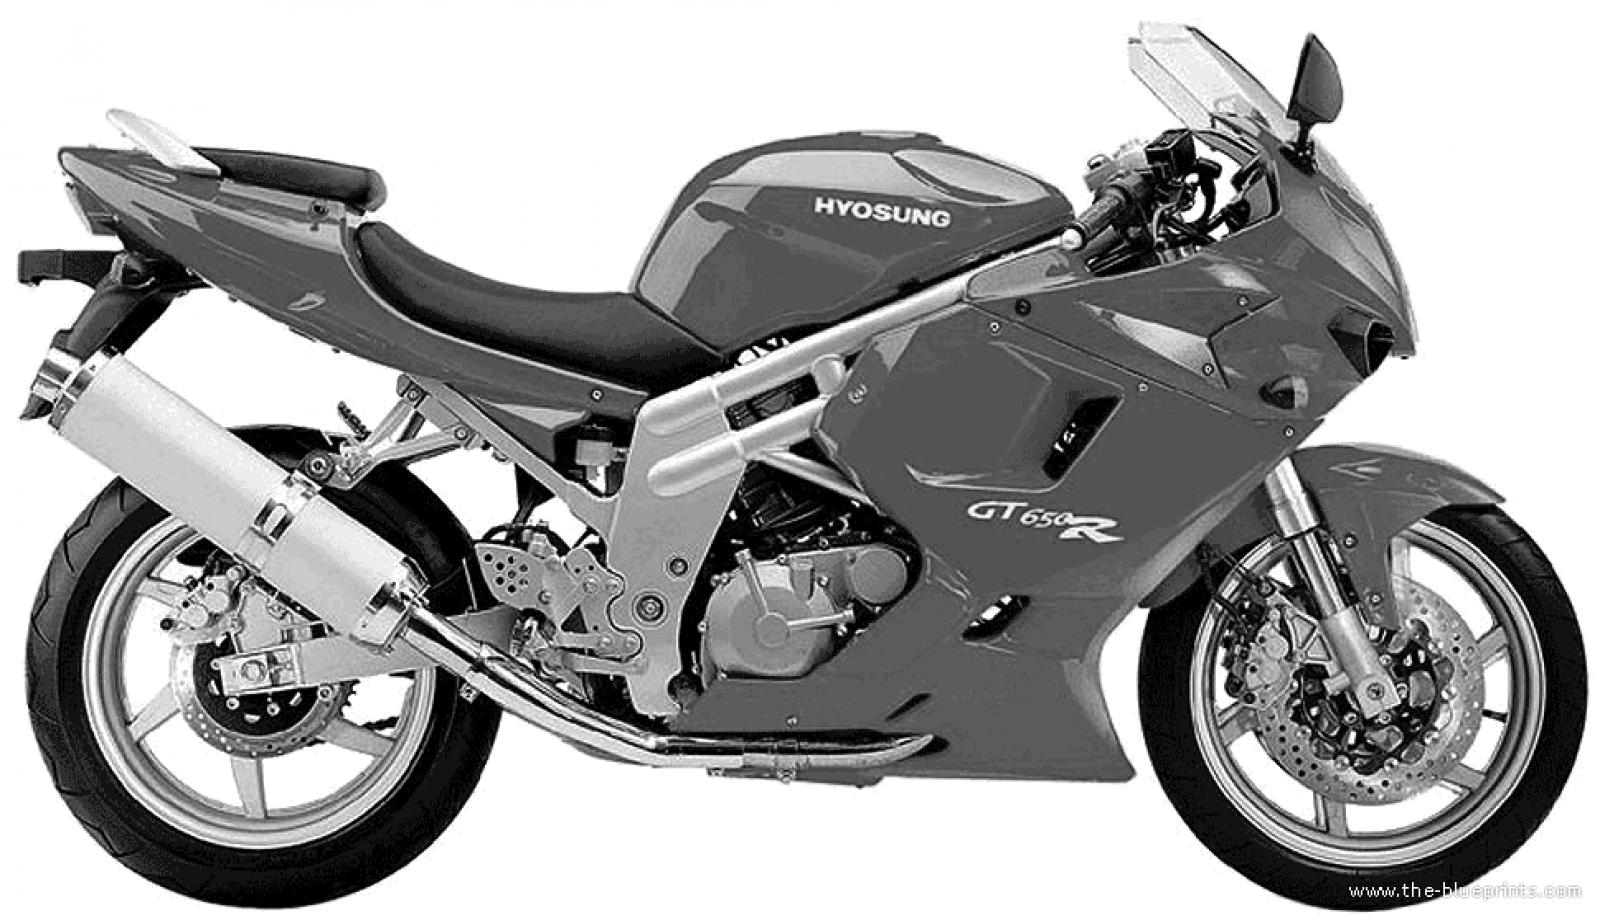 Gts 650. 2006 Hyosung gt650r. Мотоцикл Хьюсонг gt650r. Gt650 2005. Hyosung 650 gt размер.